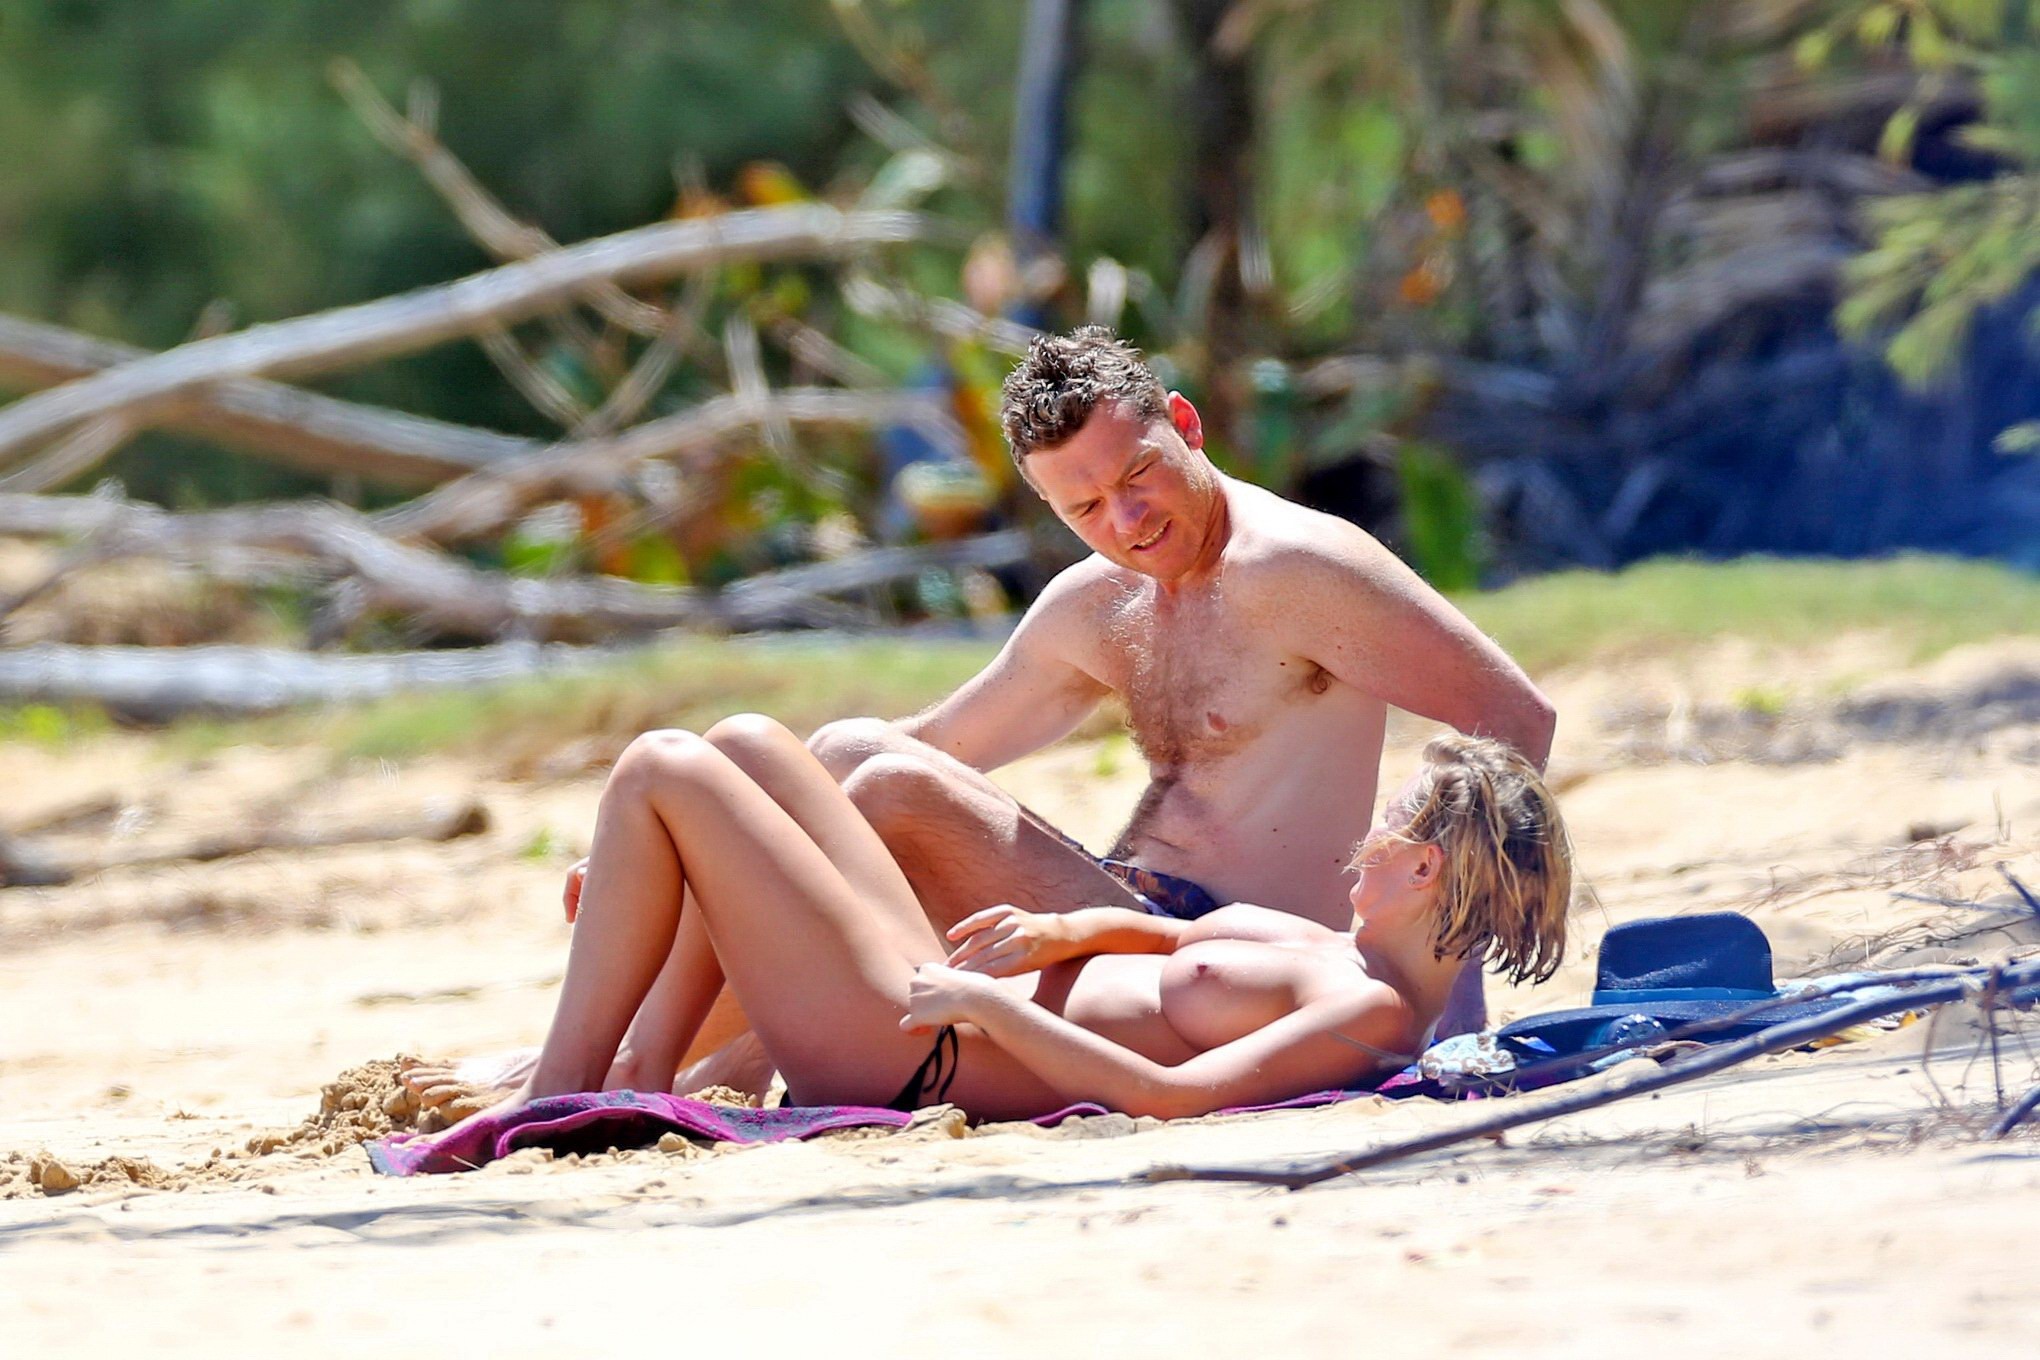 Busty lara bingle abbronzatura nudo su una spiaggia in hawaii
 #75187293